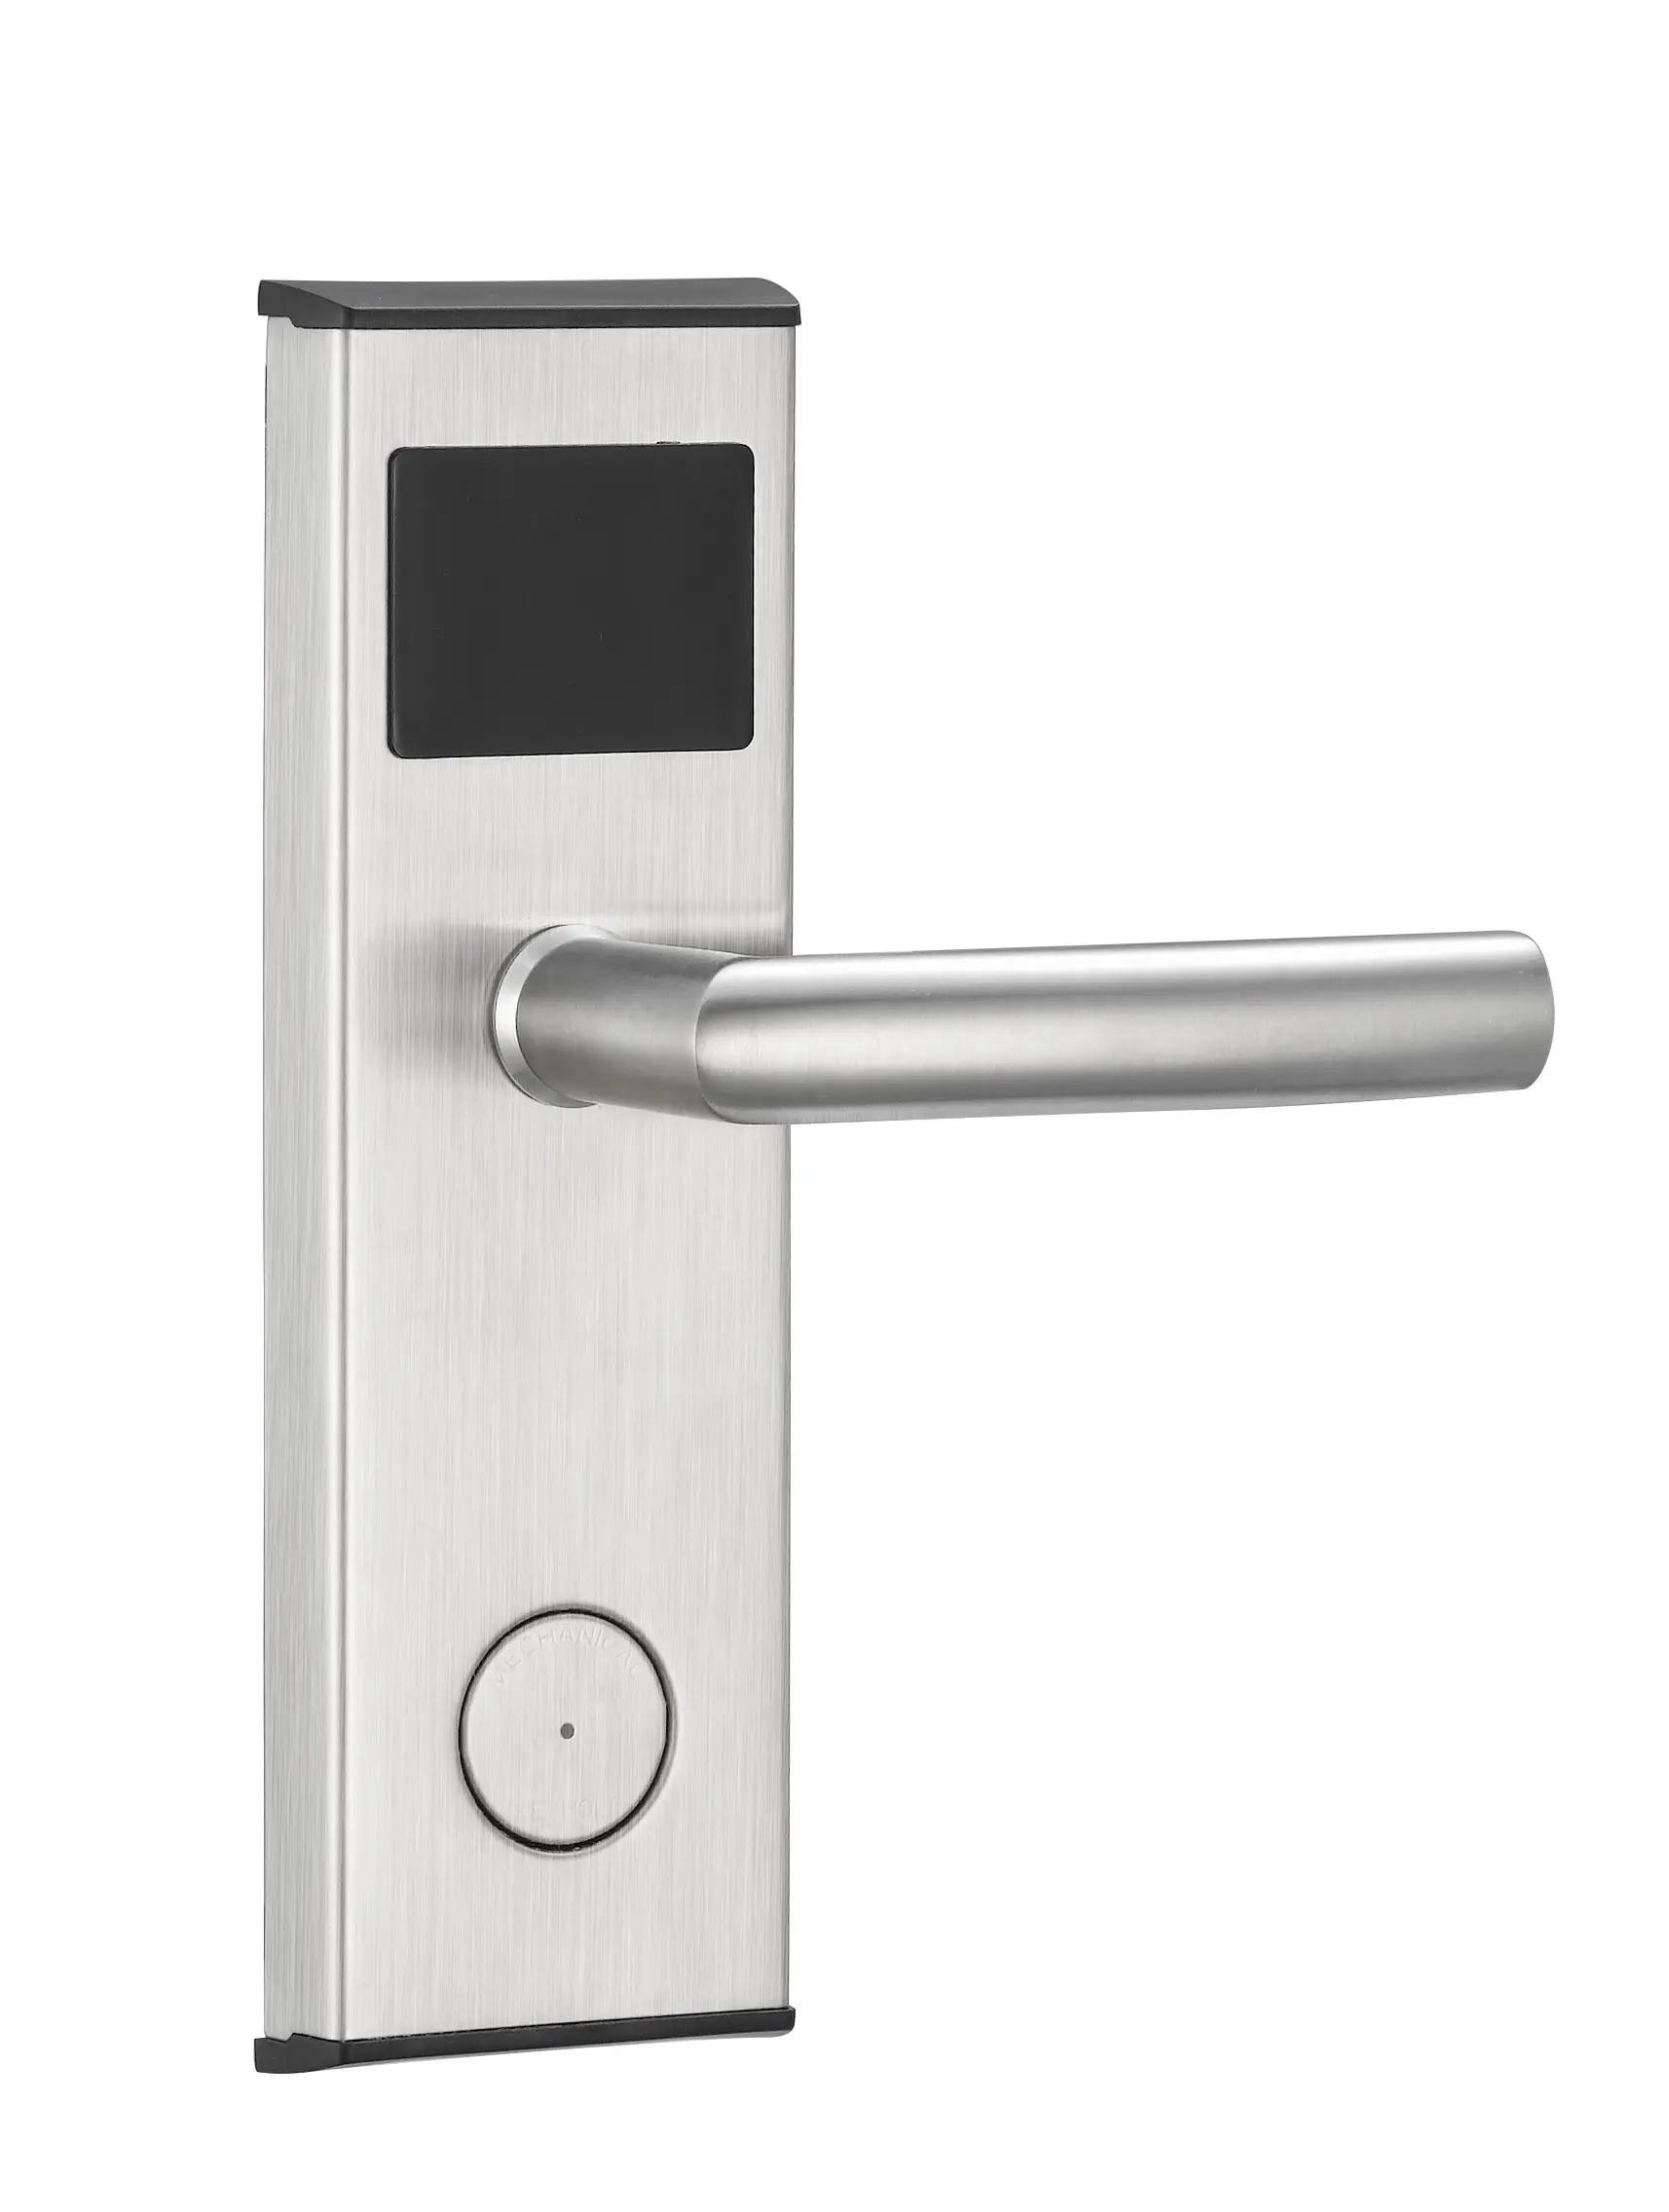 RF Pembaca Kartu Kunci Rfid Pintu Kayu Cerdas, Sistem Pengunci Pintu Kayu Tanpa Kunci Harga Elektronik Pabrikan Digital Pintu Pintar Kunci Hotel